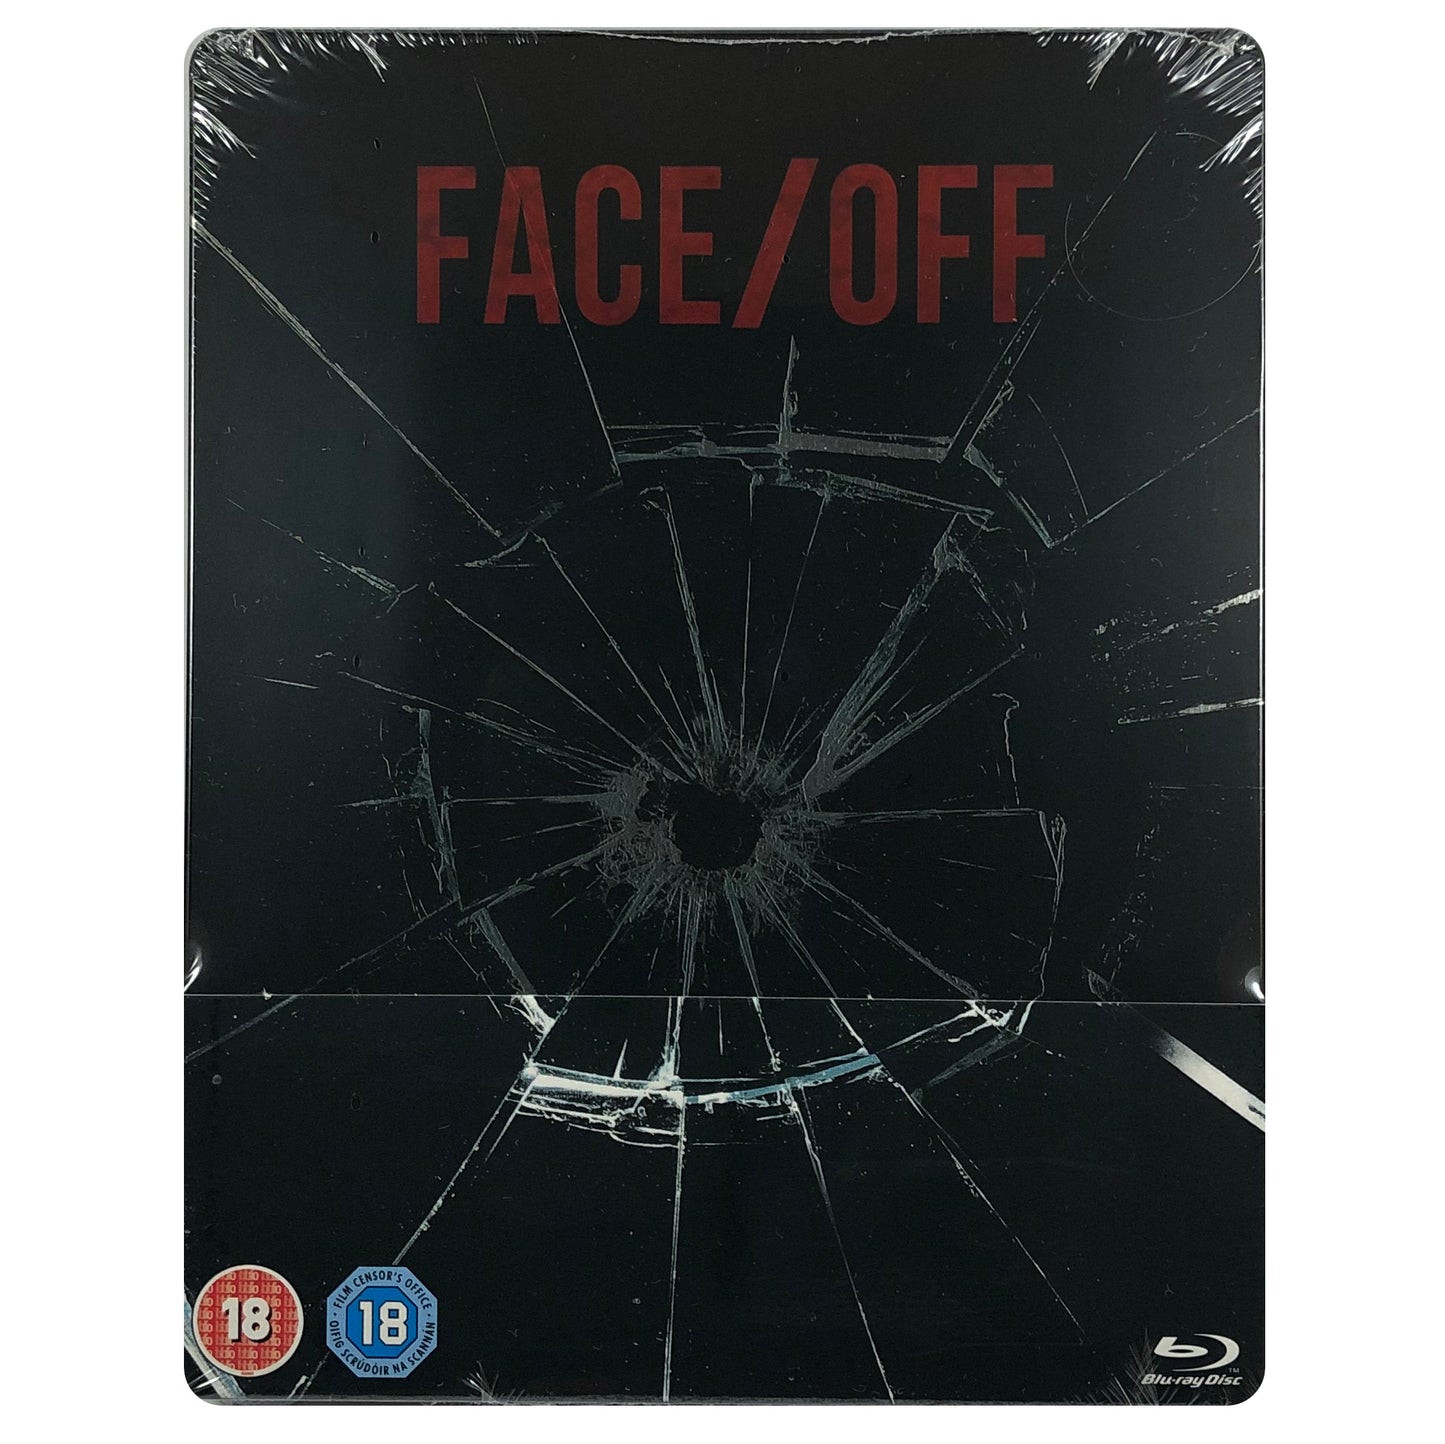 Face / Off Blu-Ray Steelbook